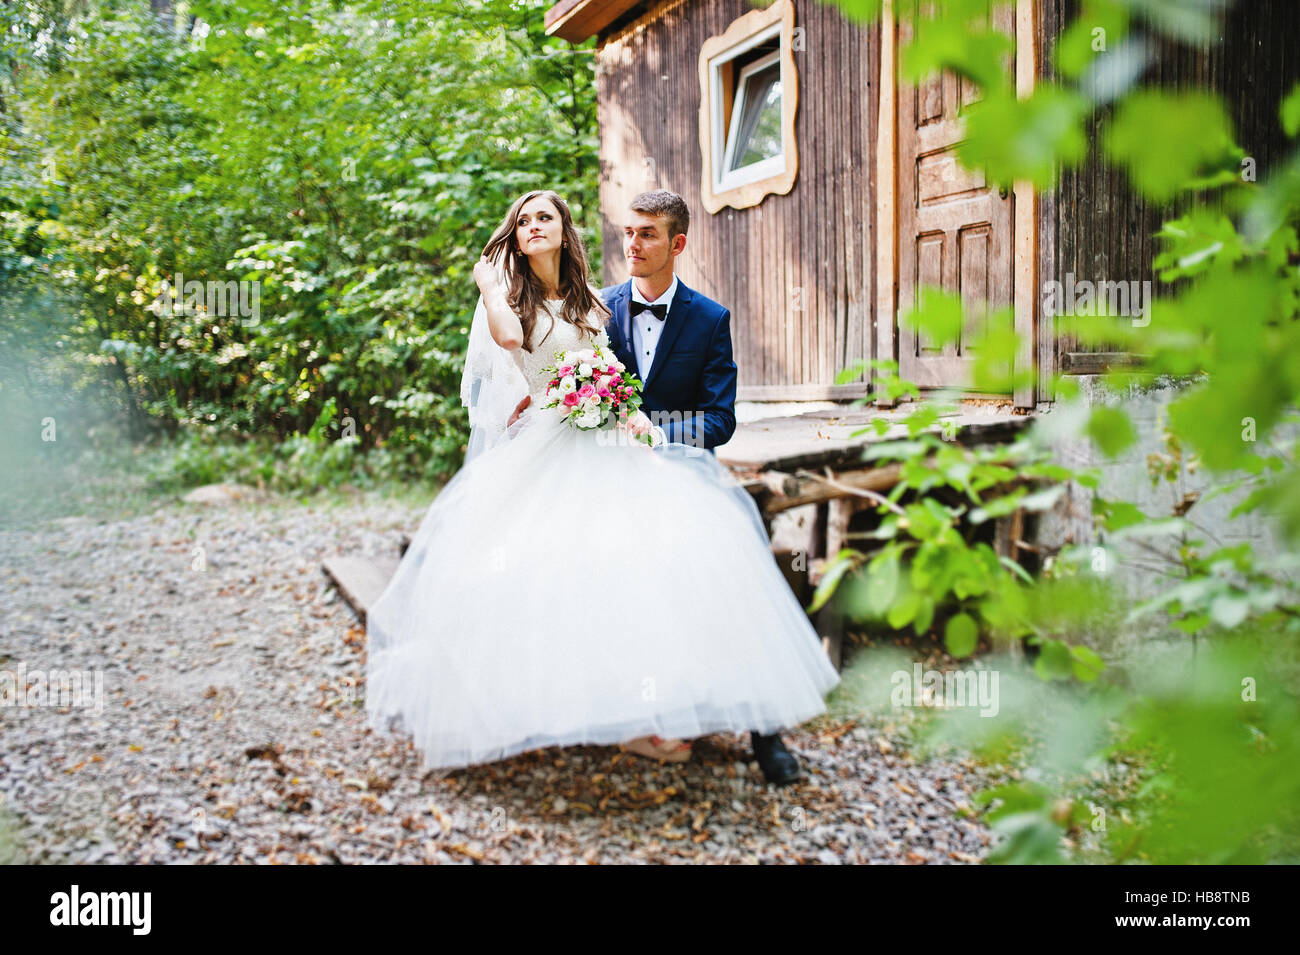 Wedding couple sitting near old wooden house Stock Photo